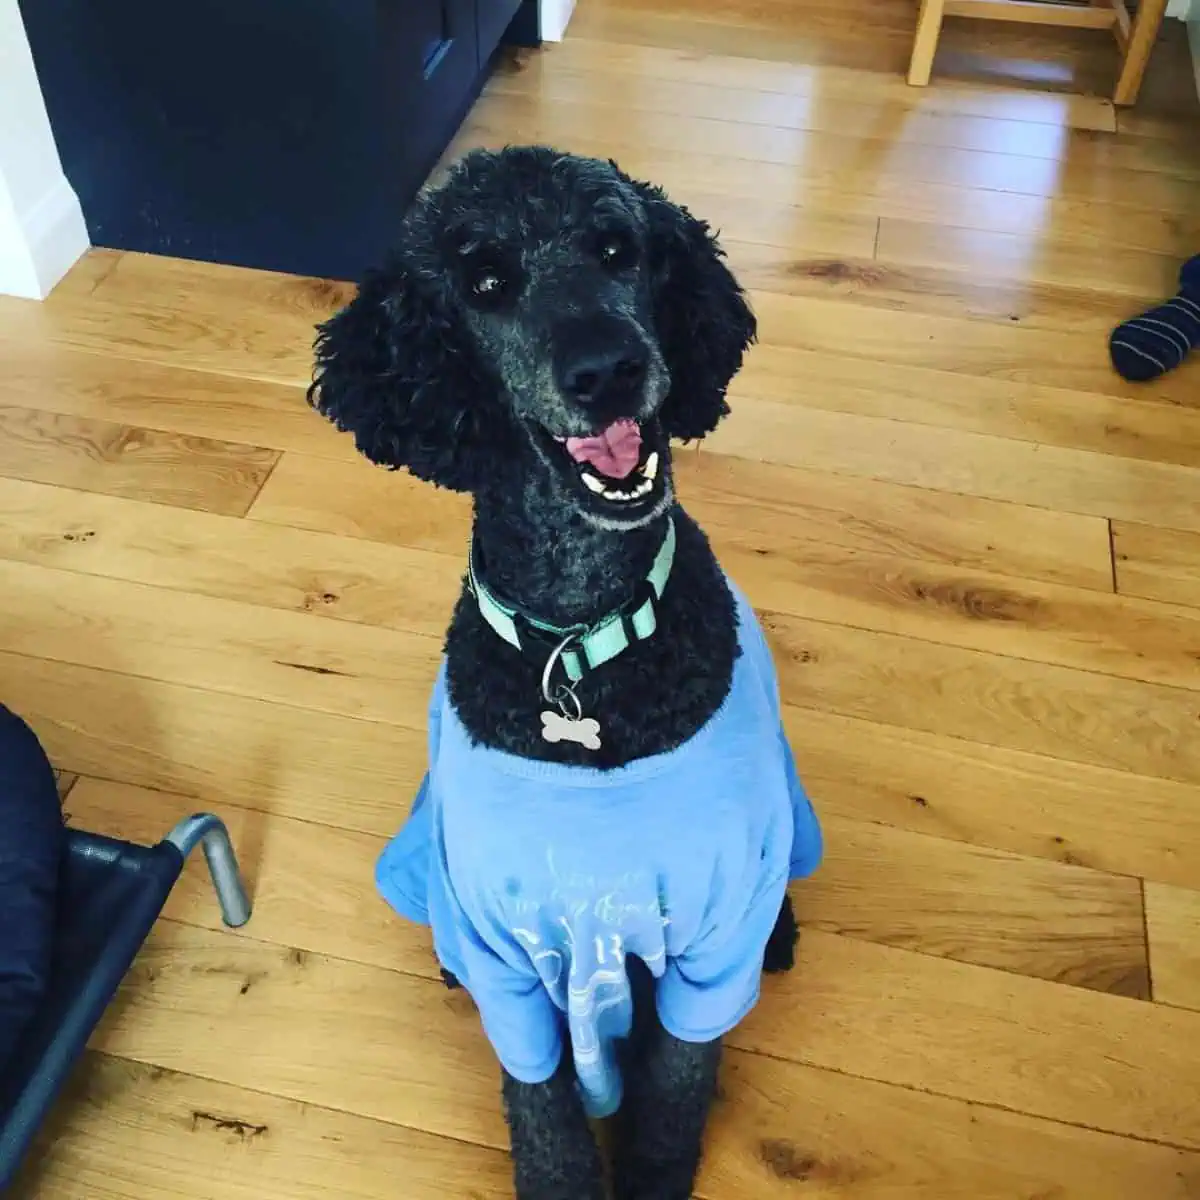 Poodle wearing blue shirt